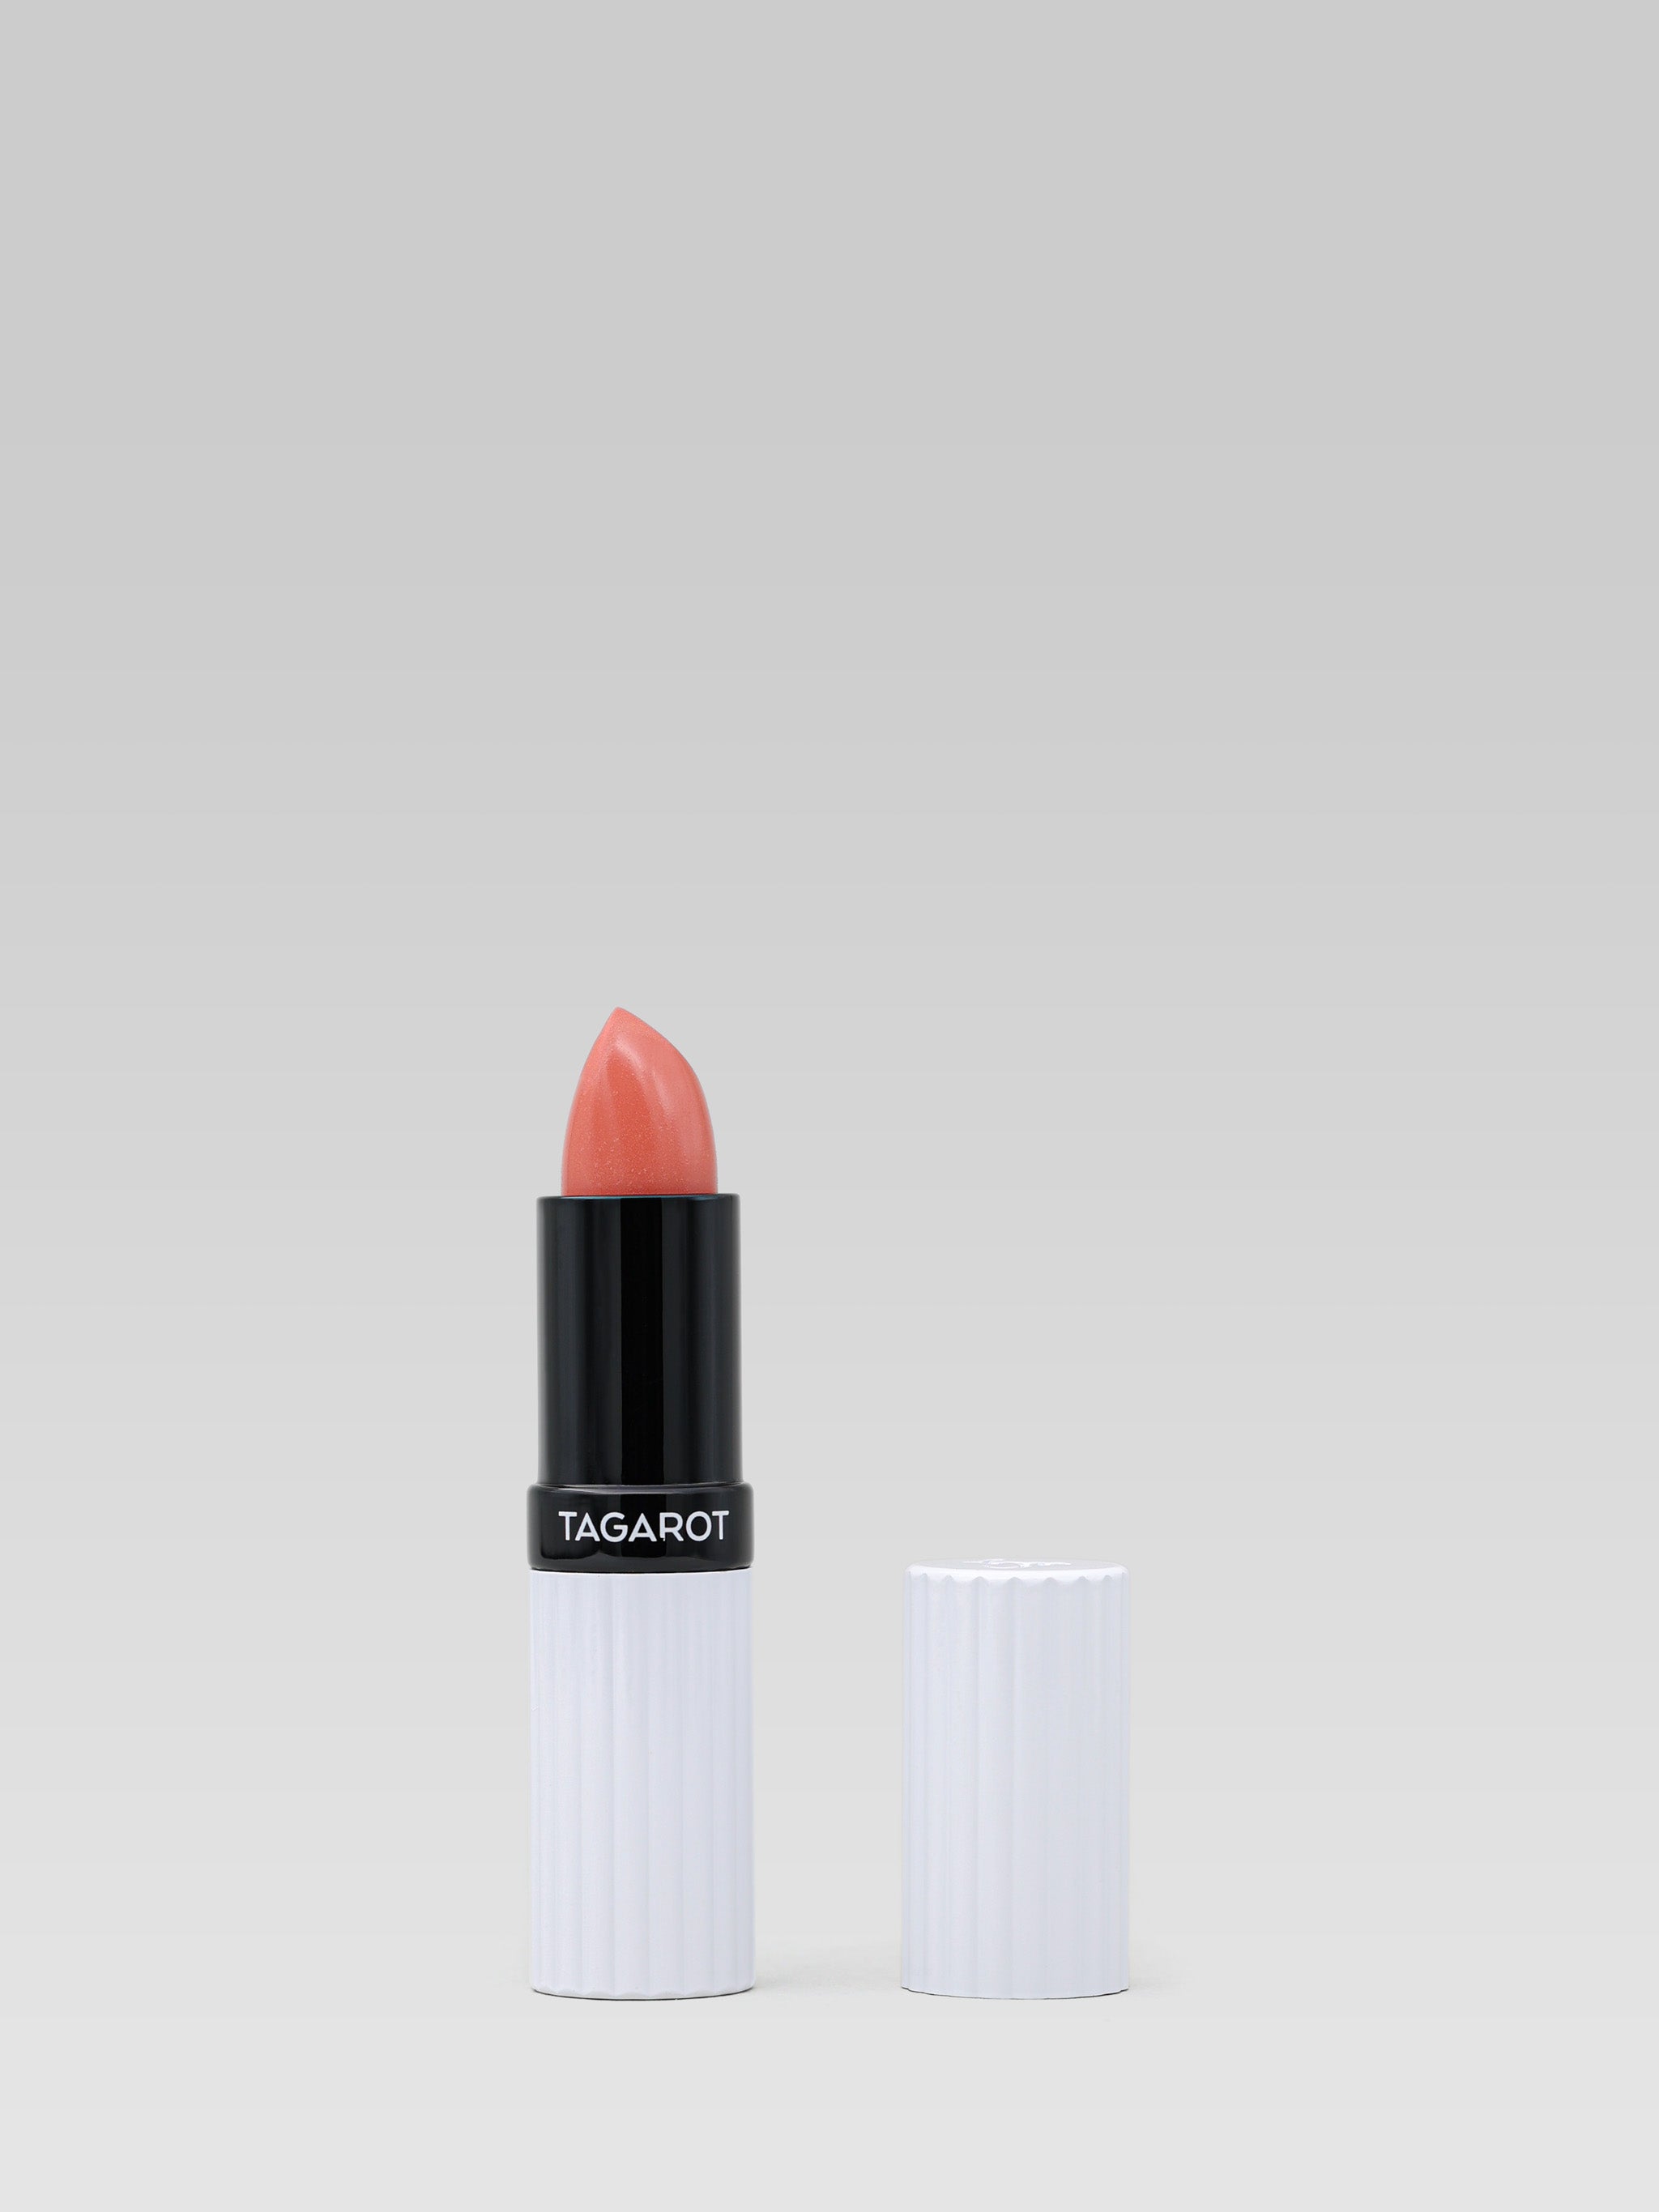 Und Gretel Tagarot Lipstick 02 Apricot product shot 